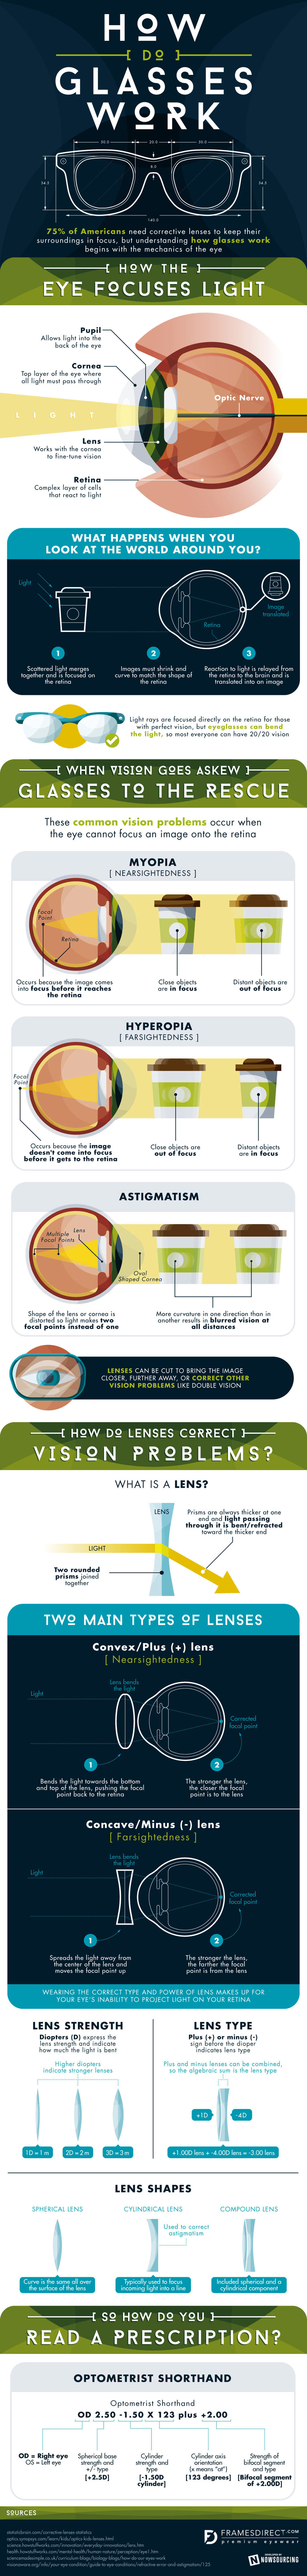 How Do Eyeglasses Work - Industrial Design Infographic